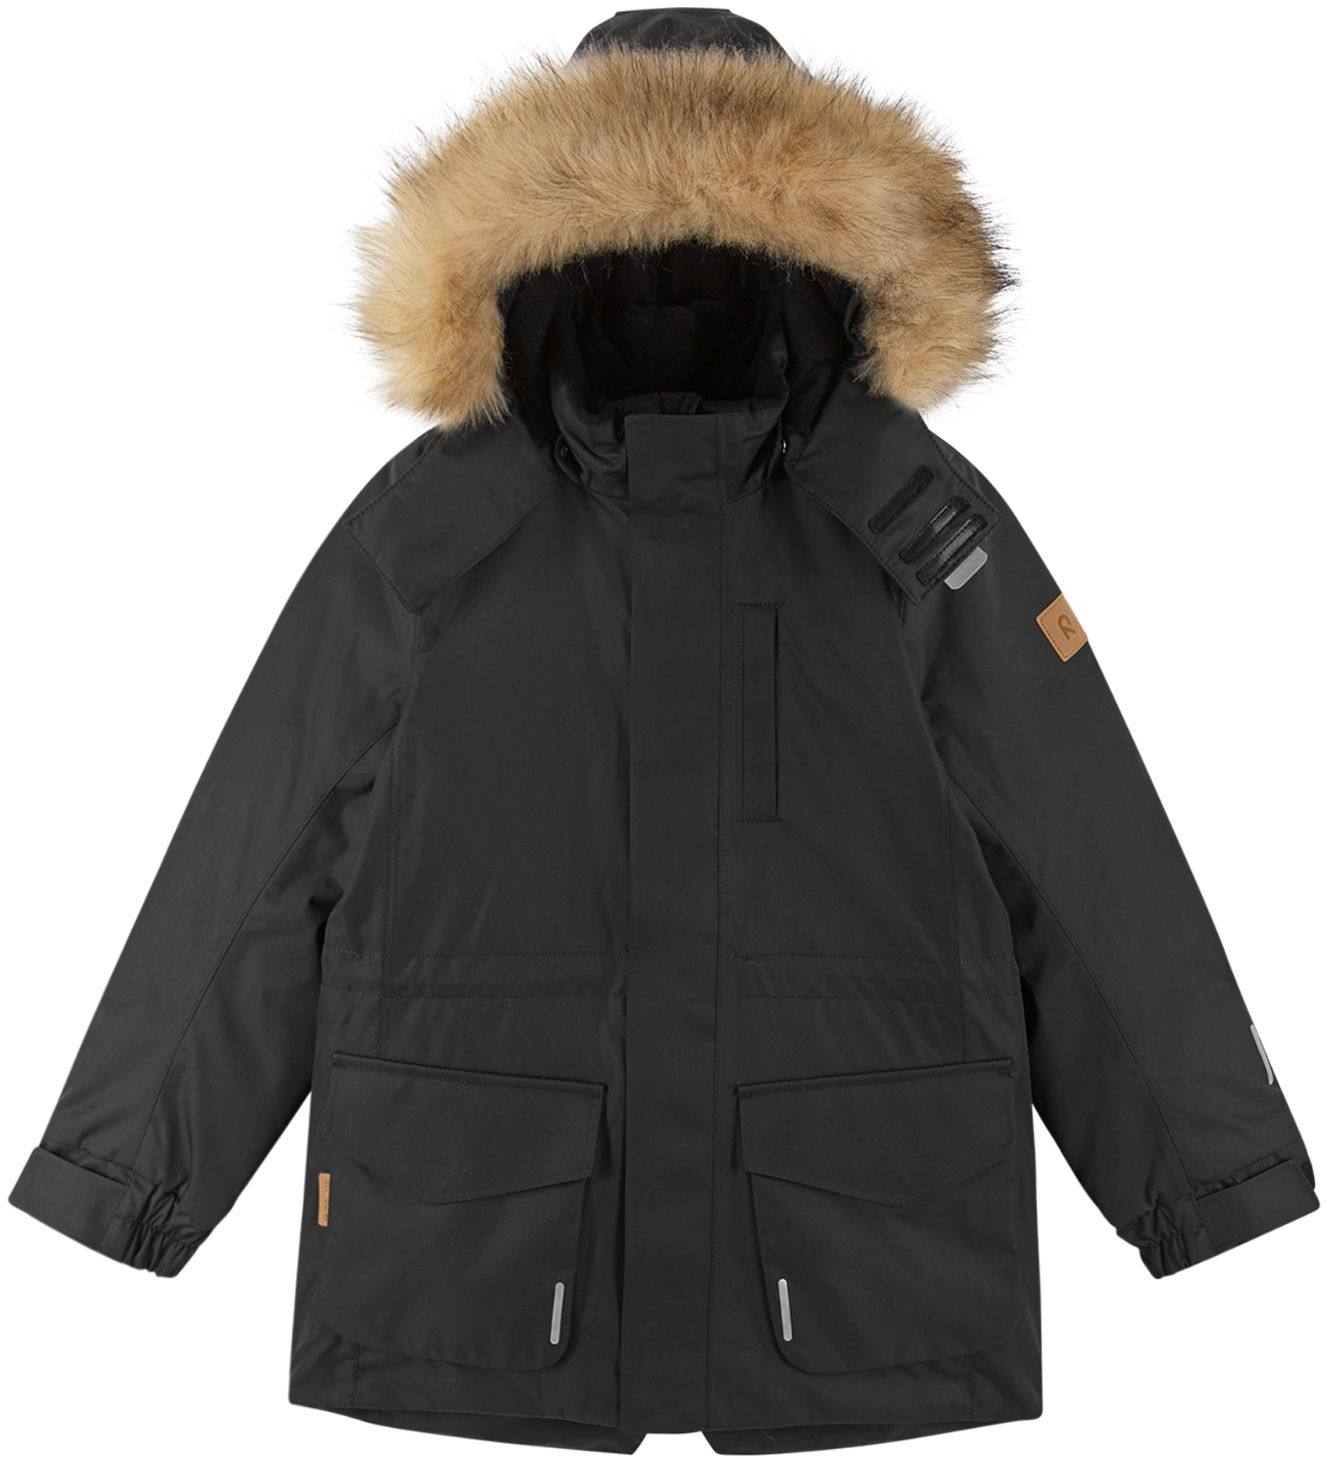 Reima Naapuri Winter Jacket Black 146